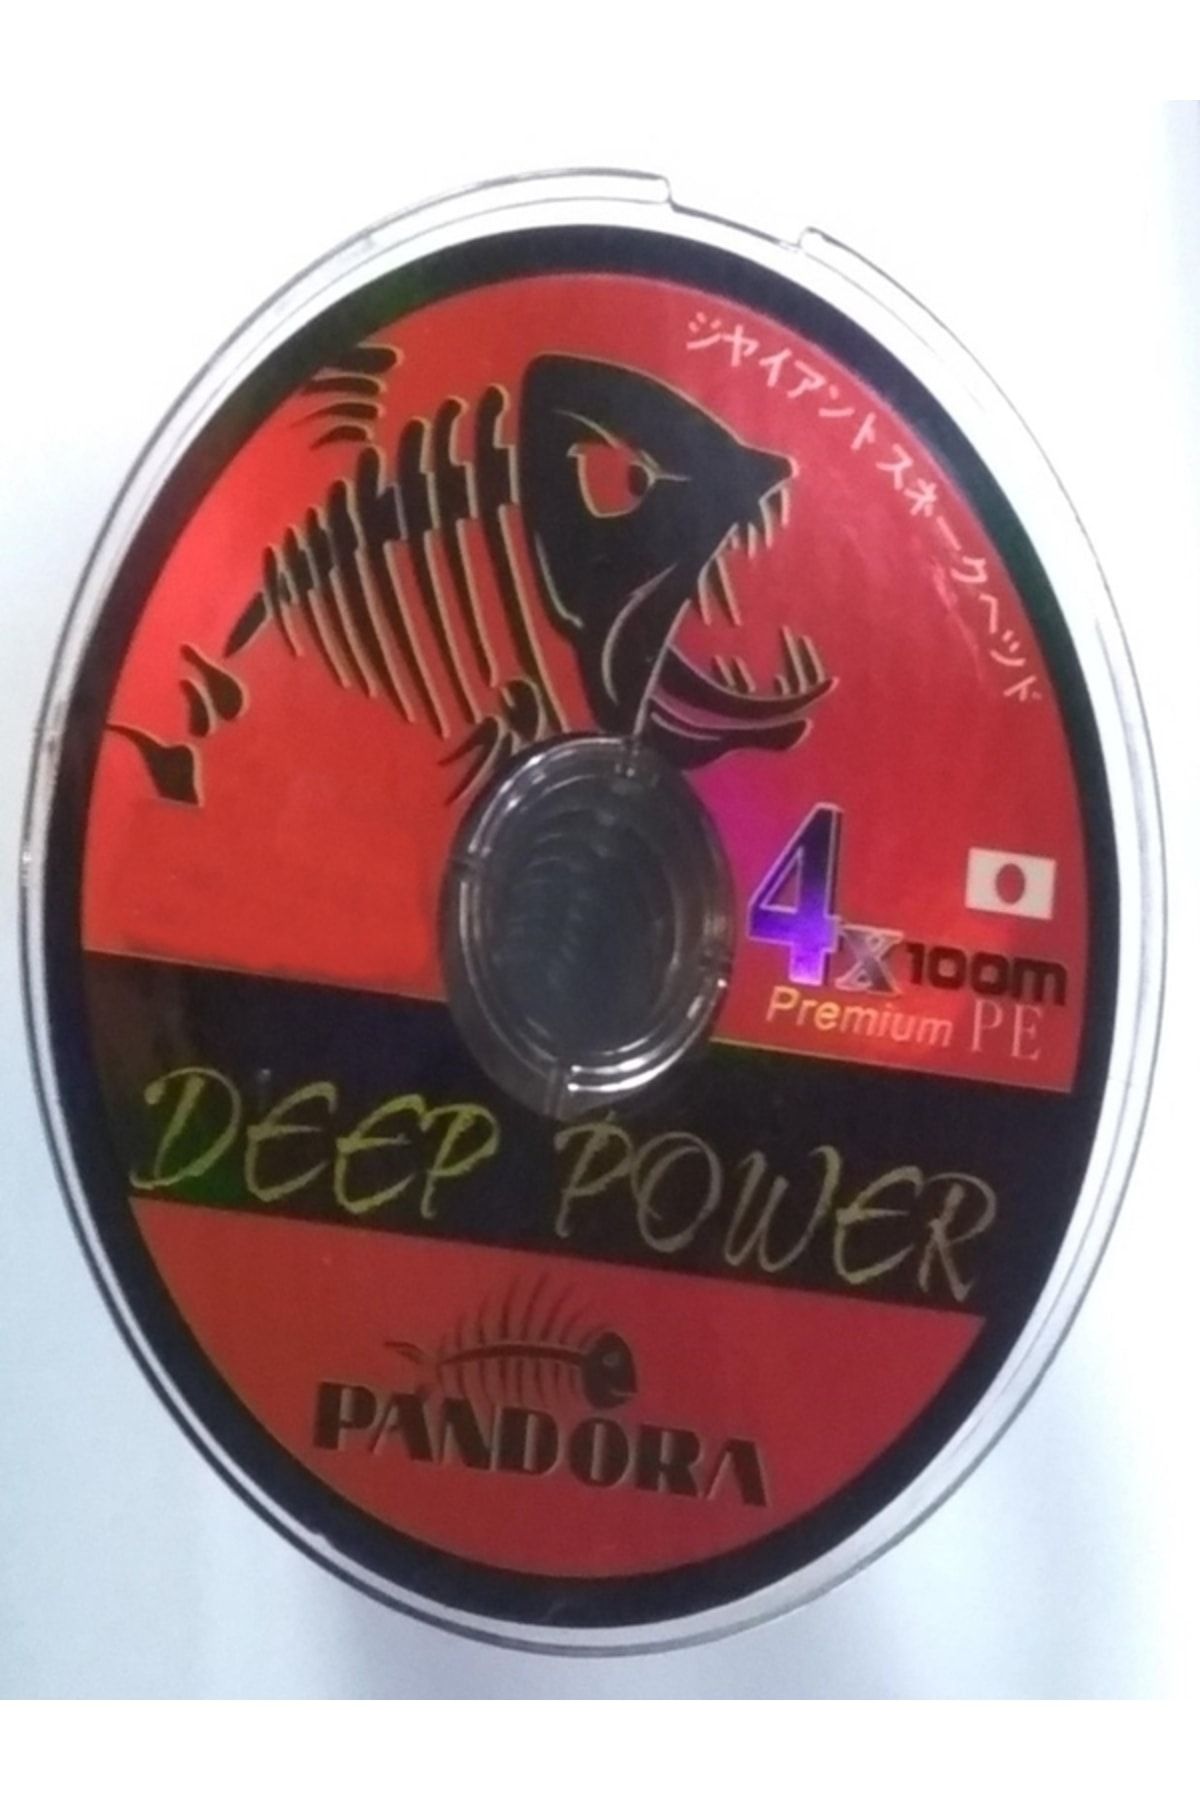 Pandora Deep Power 4x -100m Ip Misina-26mm-17,5 Test 0.16